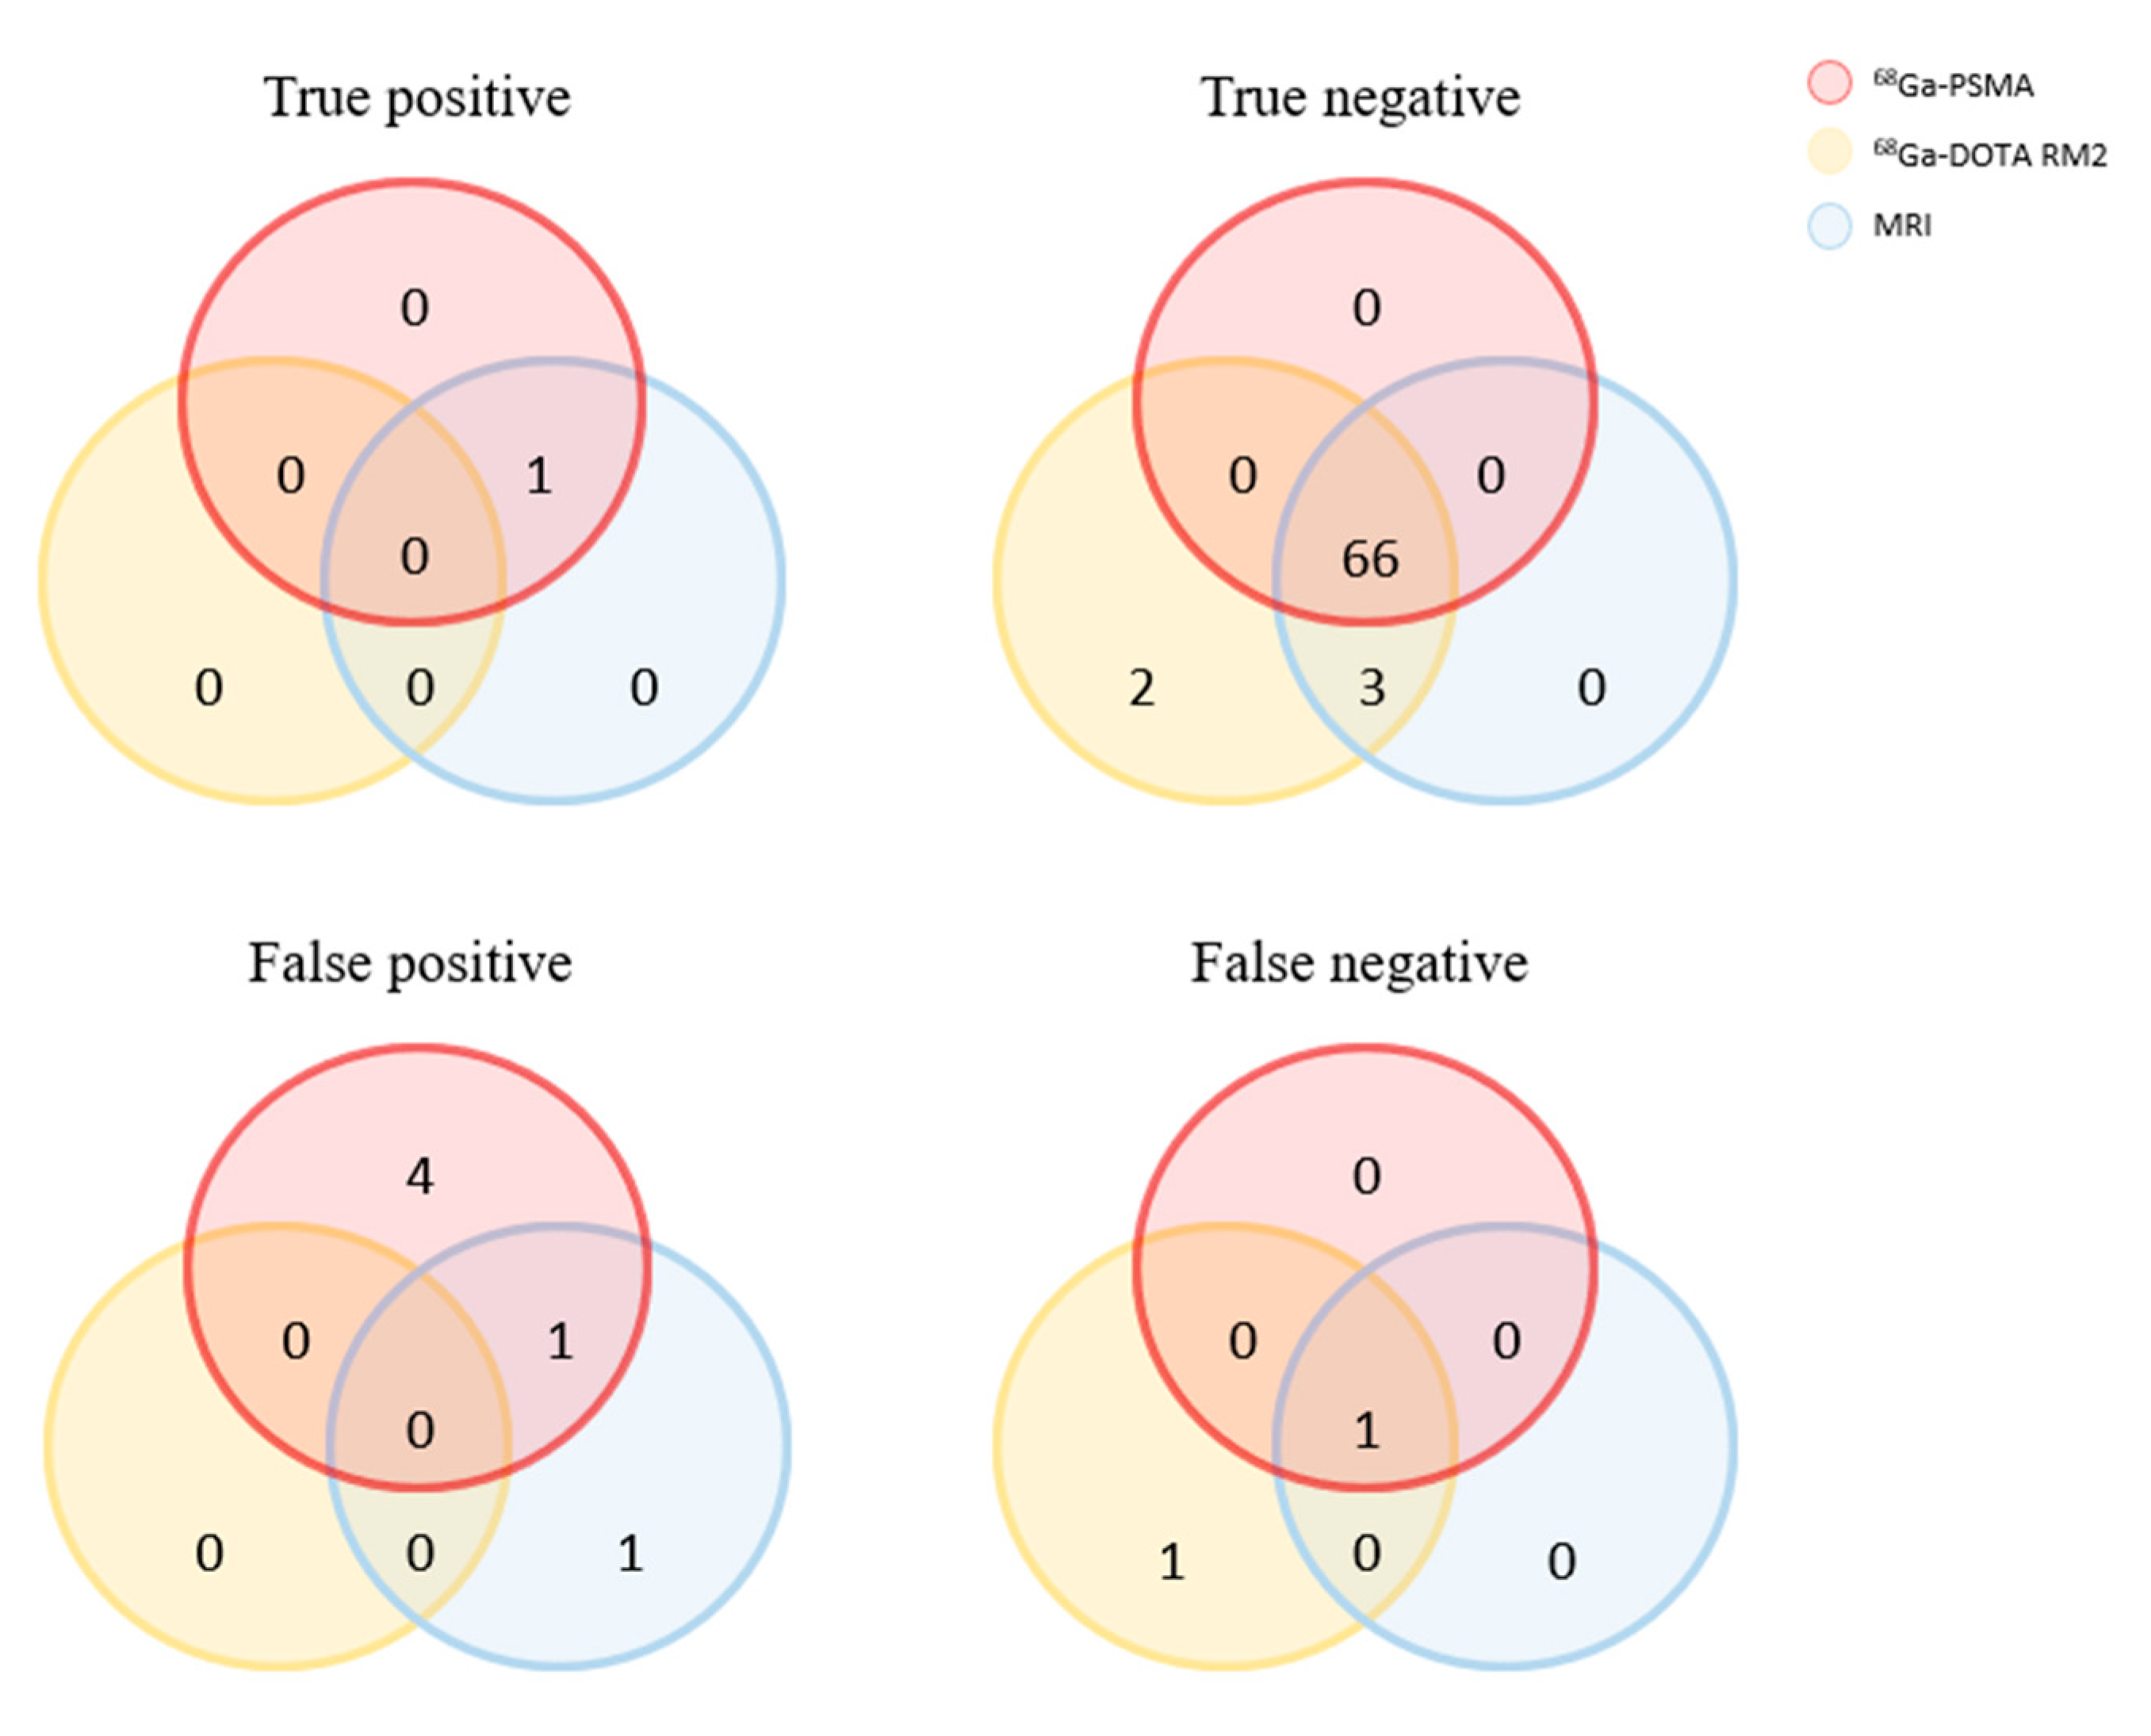 True positive false negative. True positive true negative. True positive true negative круговая диаграмма. Задача круги Эйлера "Юпитер & (Марс | Сатурн)".